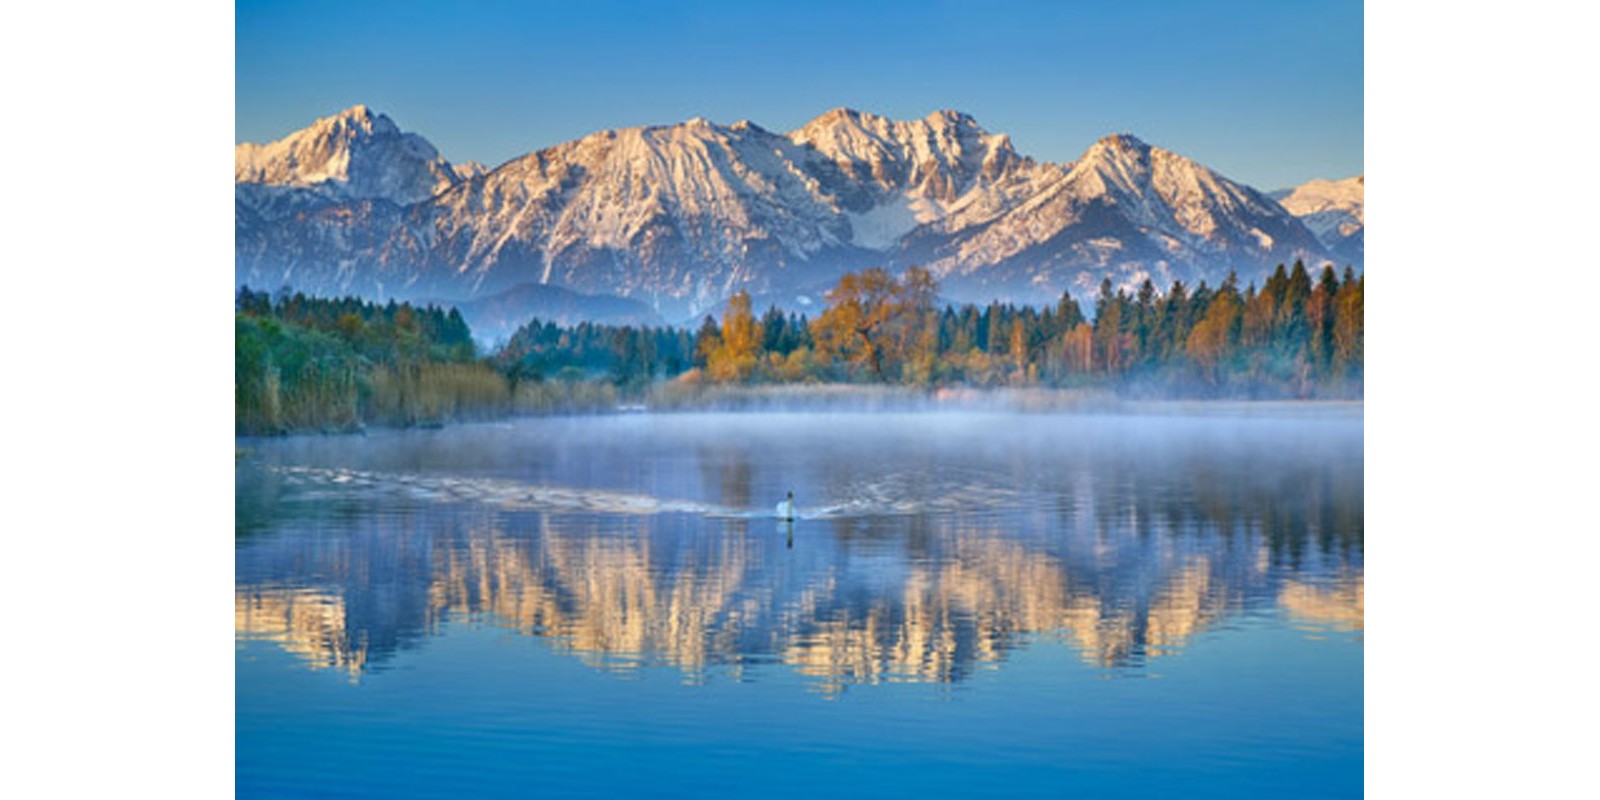 FRANK KRAHMER - Allgaeu Alps and Hopfensee lake, Bavaria, Germany